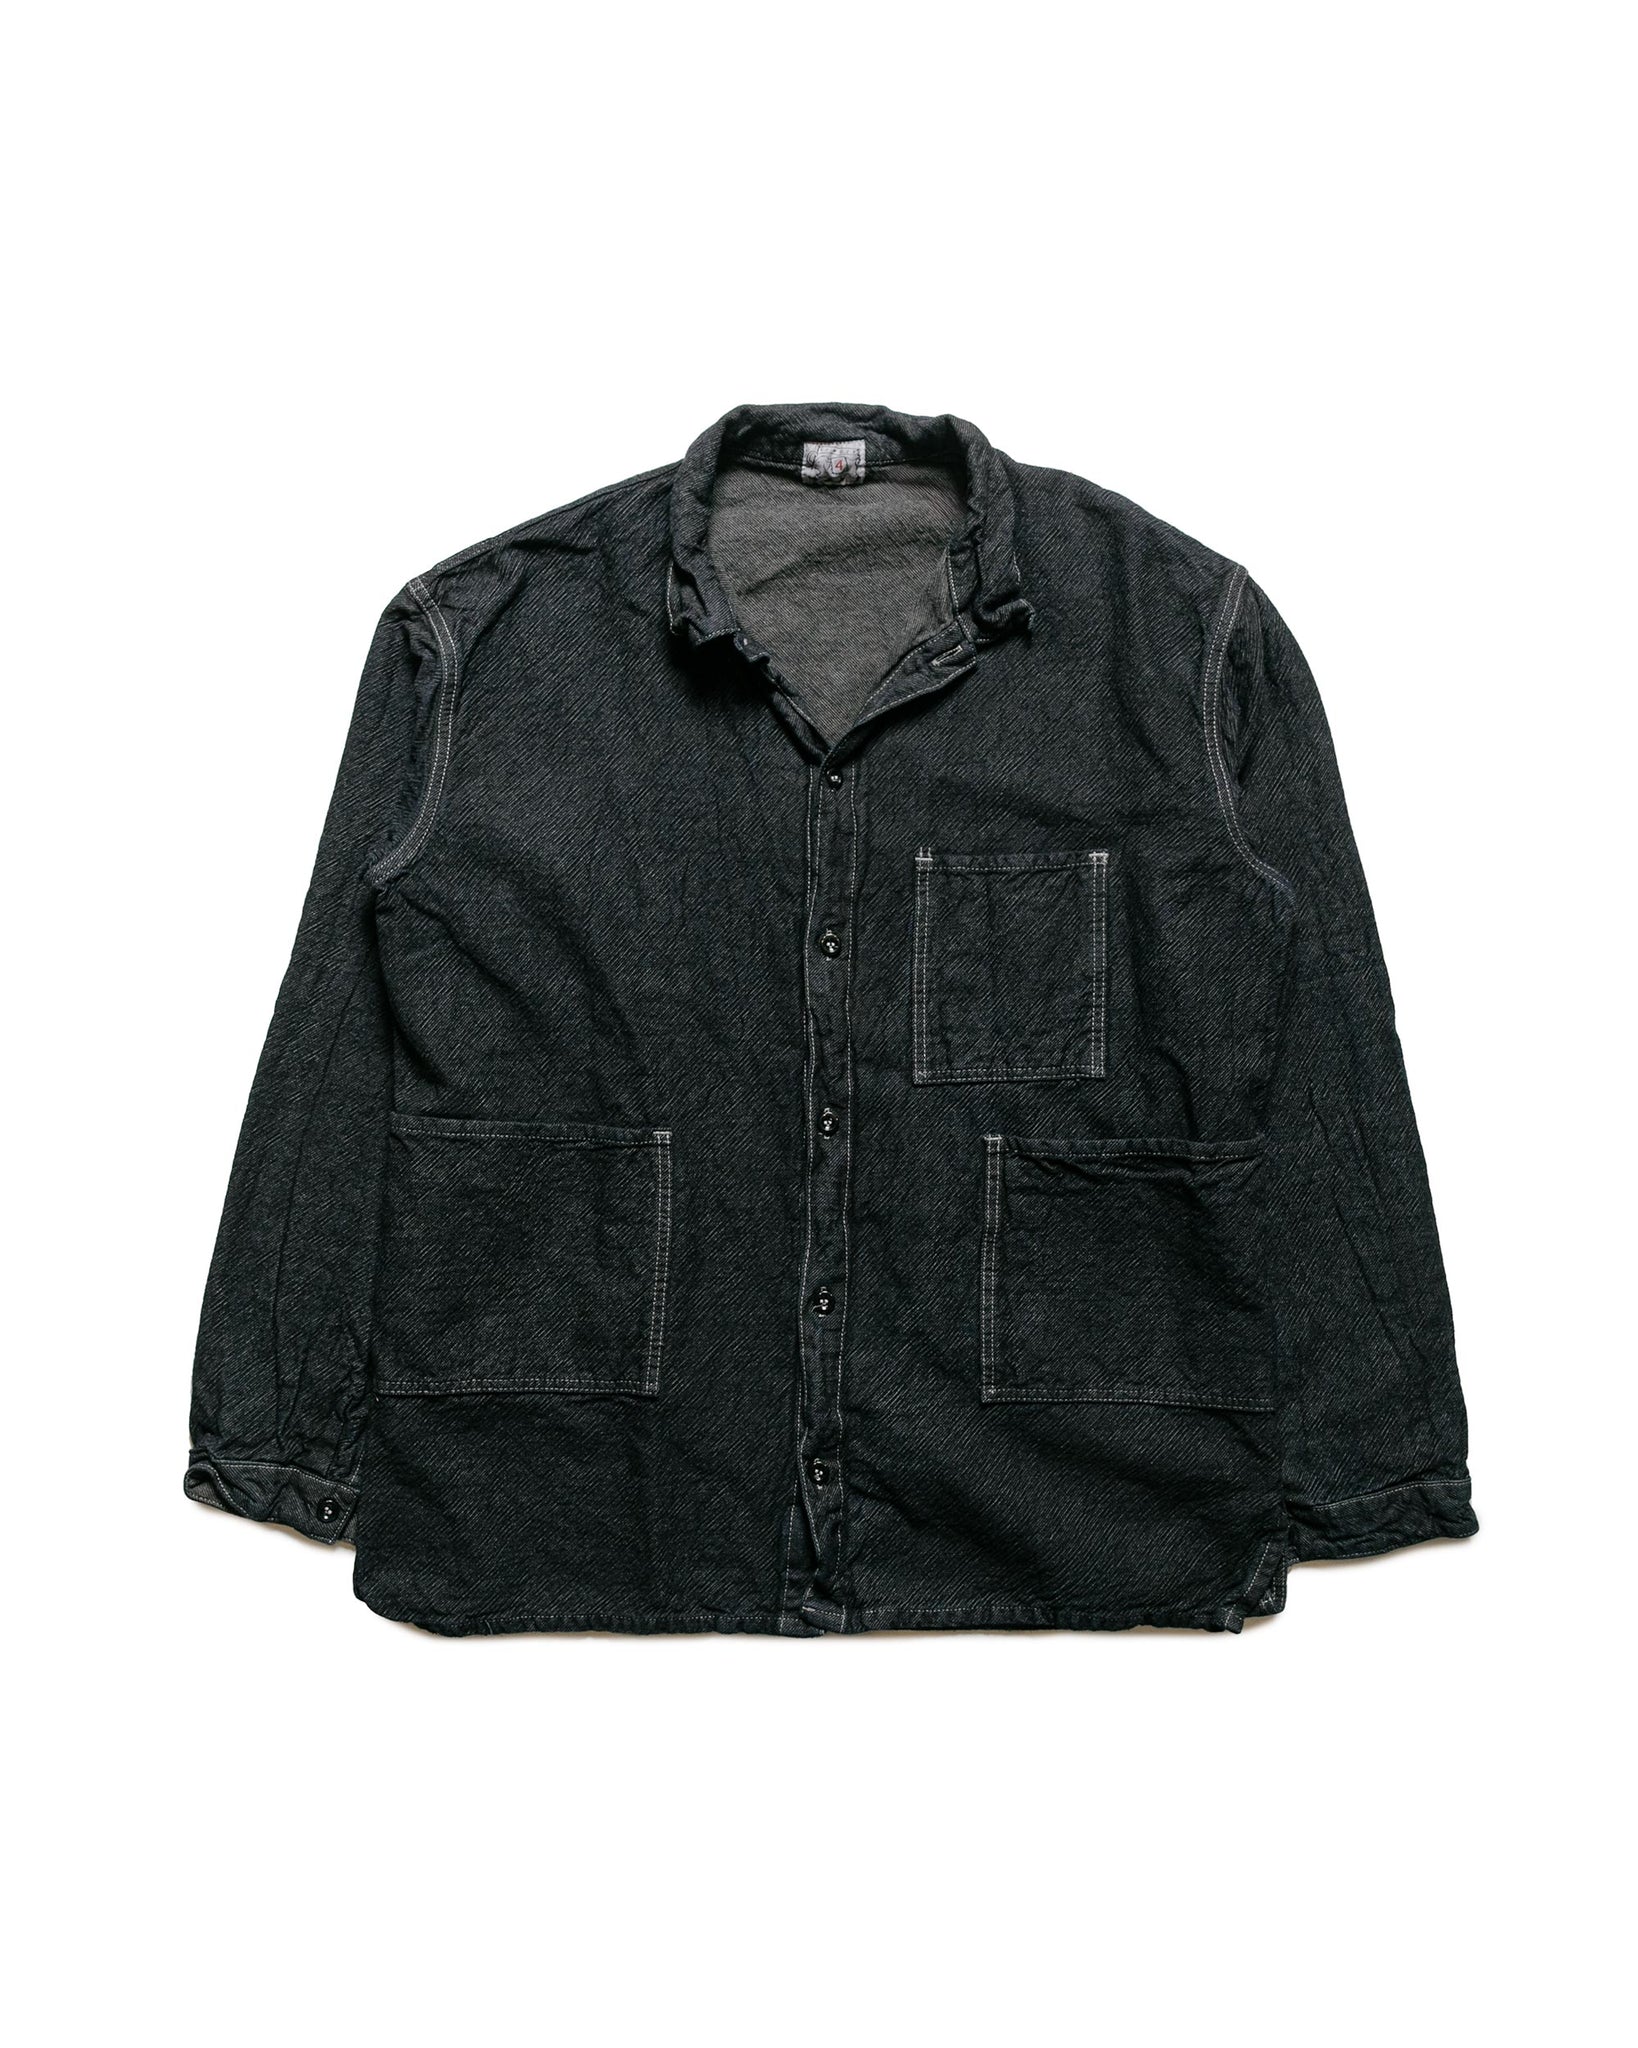 Tender Type 410 Three Pocket Square Tail Shirt Indigo Cotton Twill Mar